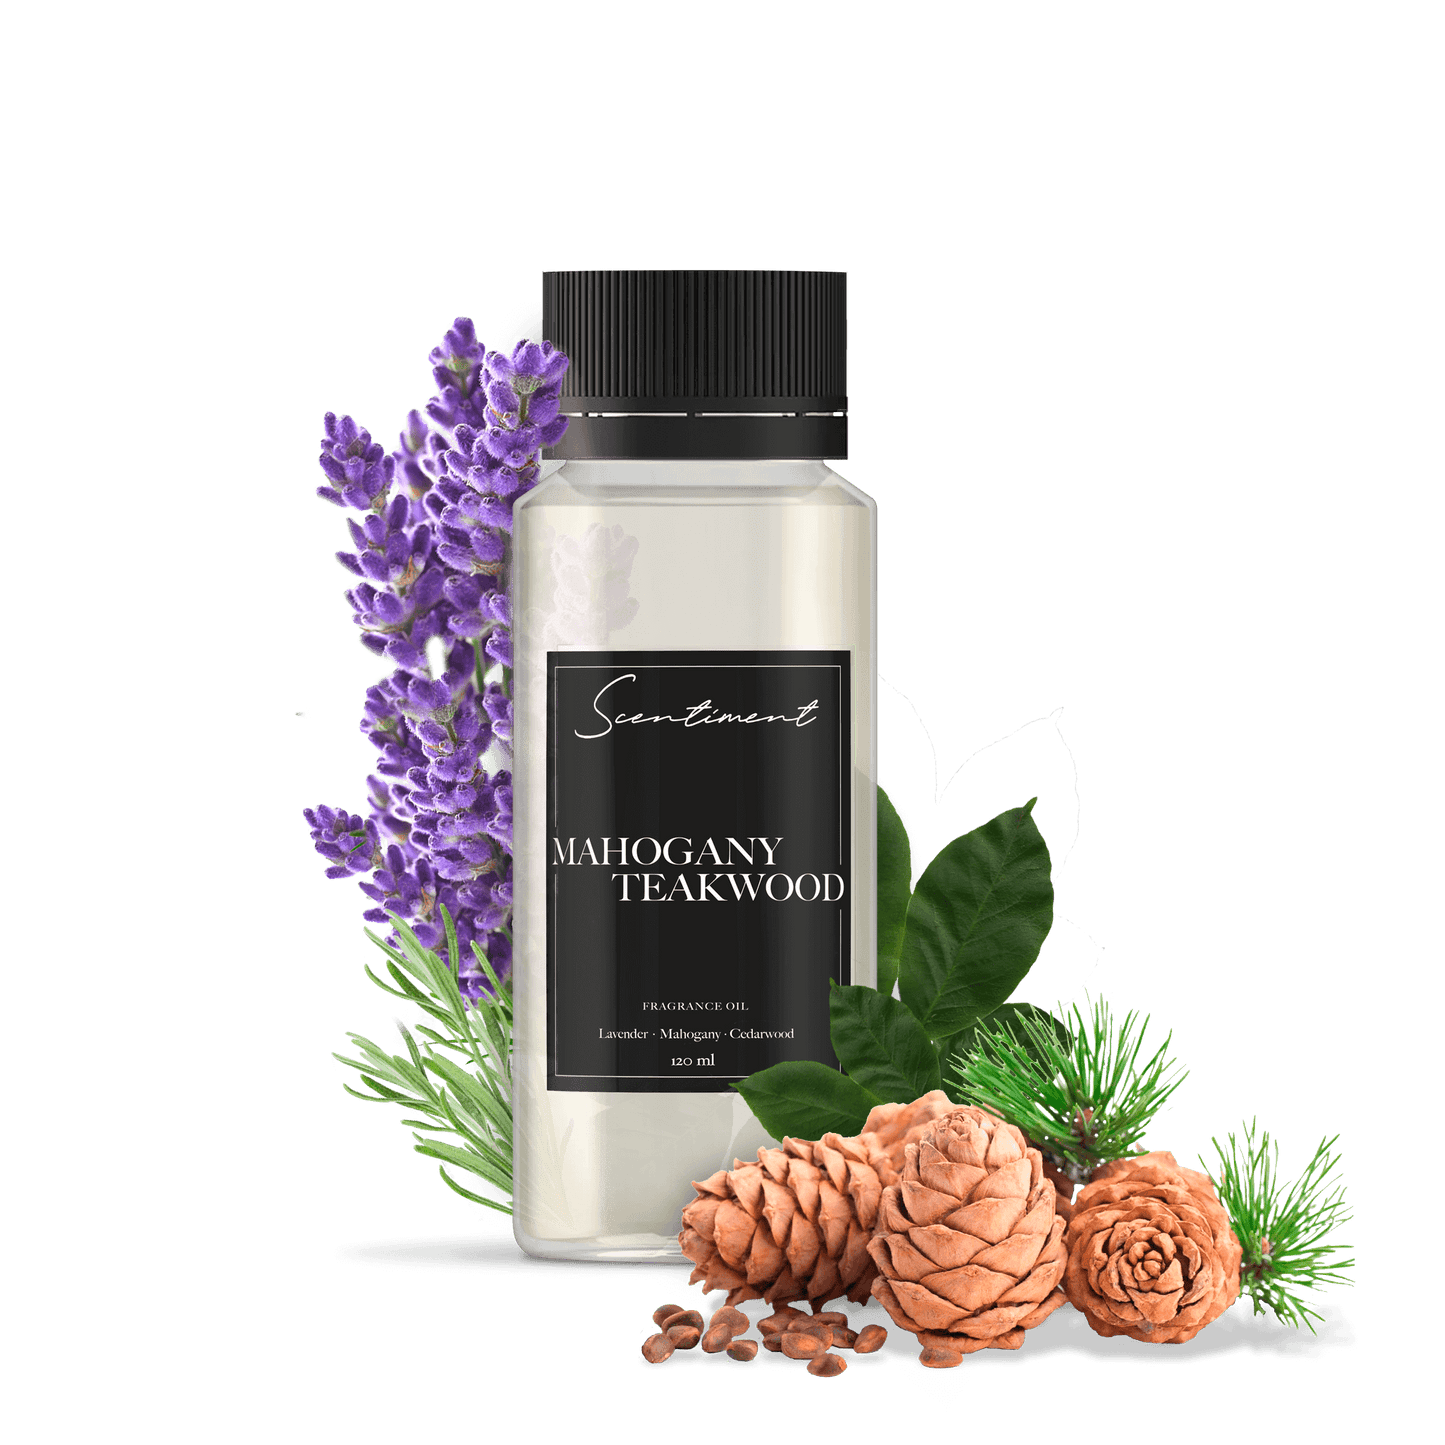 Mahogany Teakwood Fragrance Oil with notes of Lavender, Mahogany, and Cedarwood.